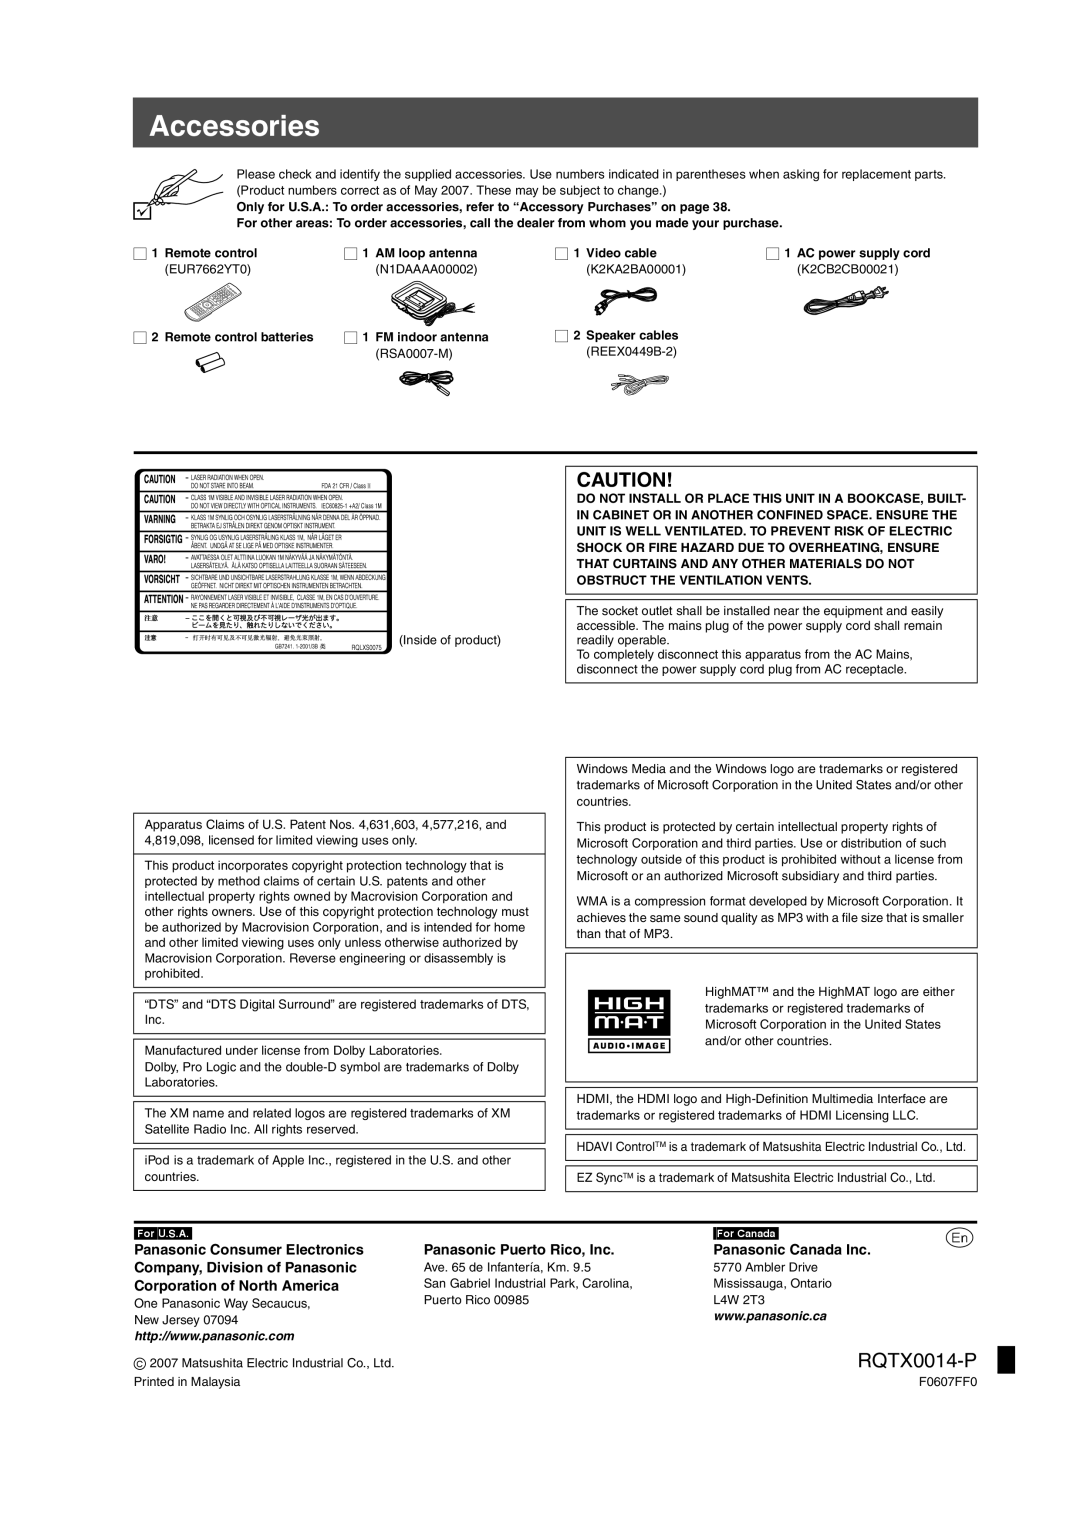 Panasonic SC-PTX5 manual Accessories, RQTX0014-P, Panasonic Consumer Electronics, Panasonic Puerto Rico, Inc, For\U.S.A 